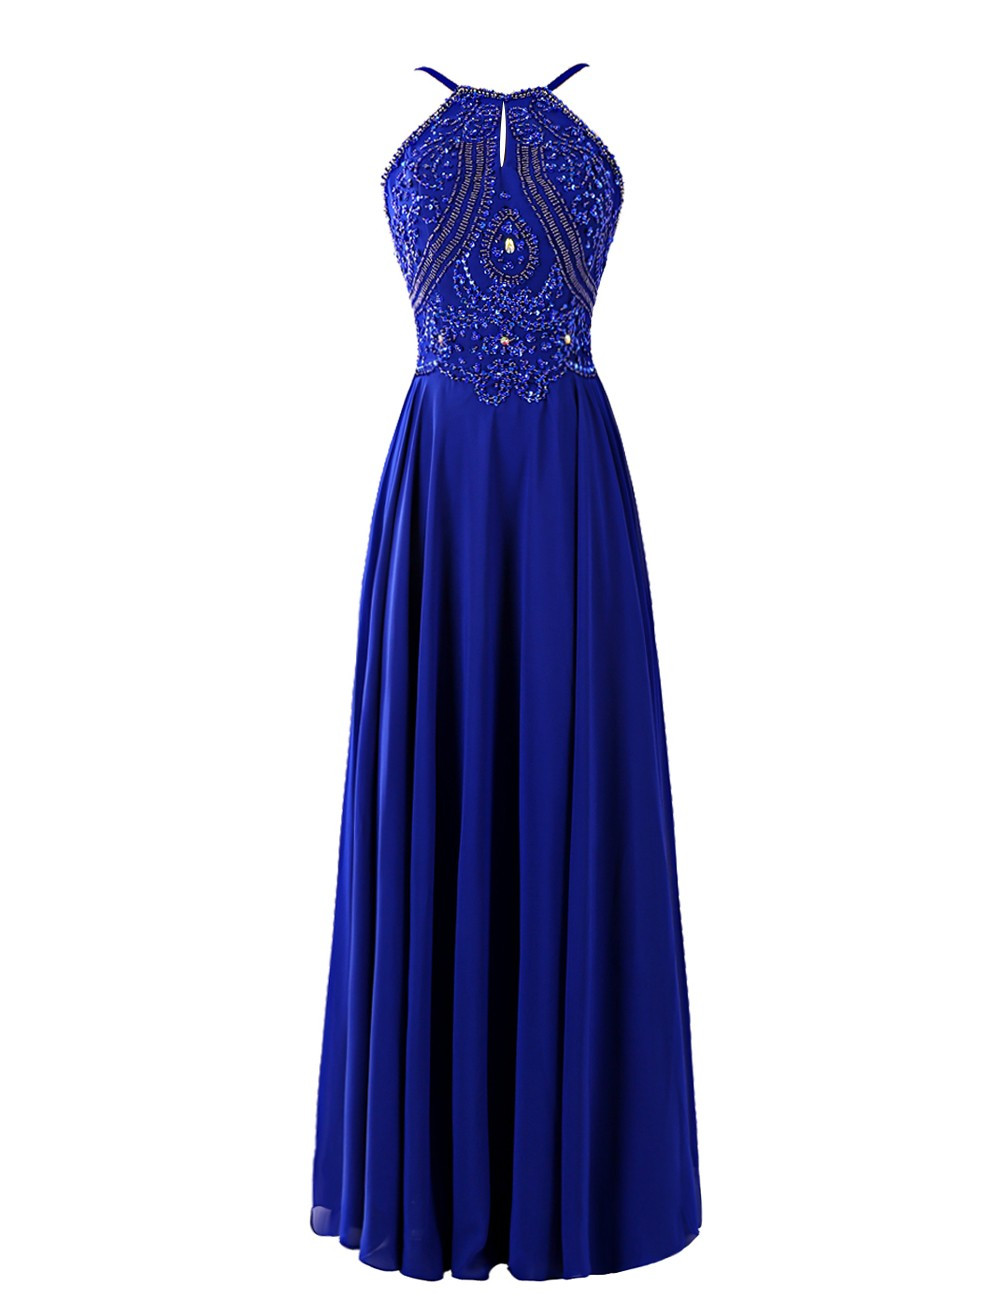 Sexy Royal Blue Chiffon Strapless Formal Dresses With Jewel Embellished Bodice Long Elegant